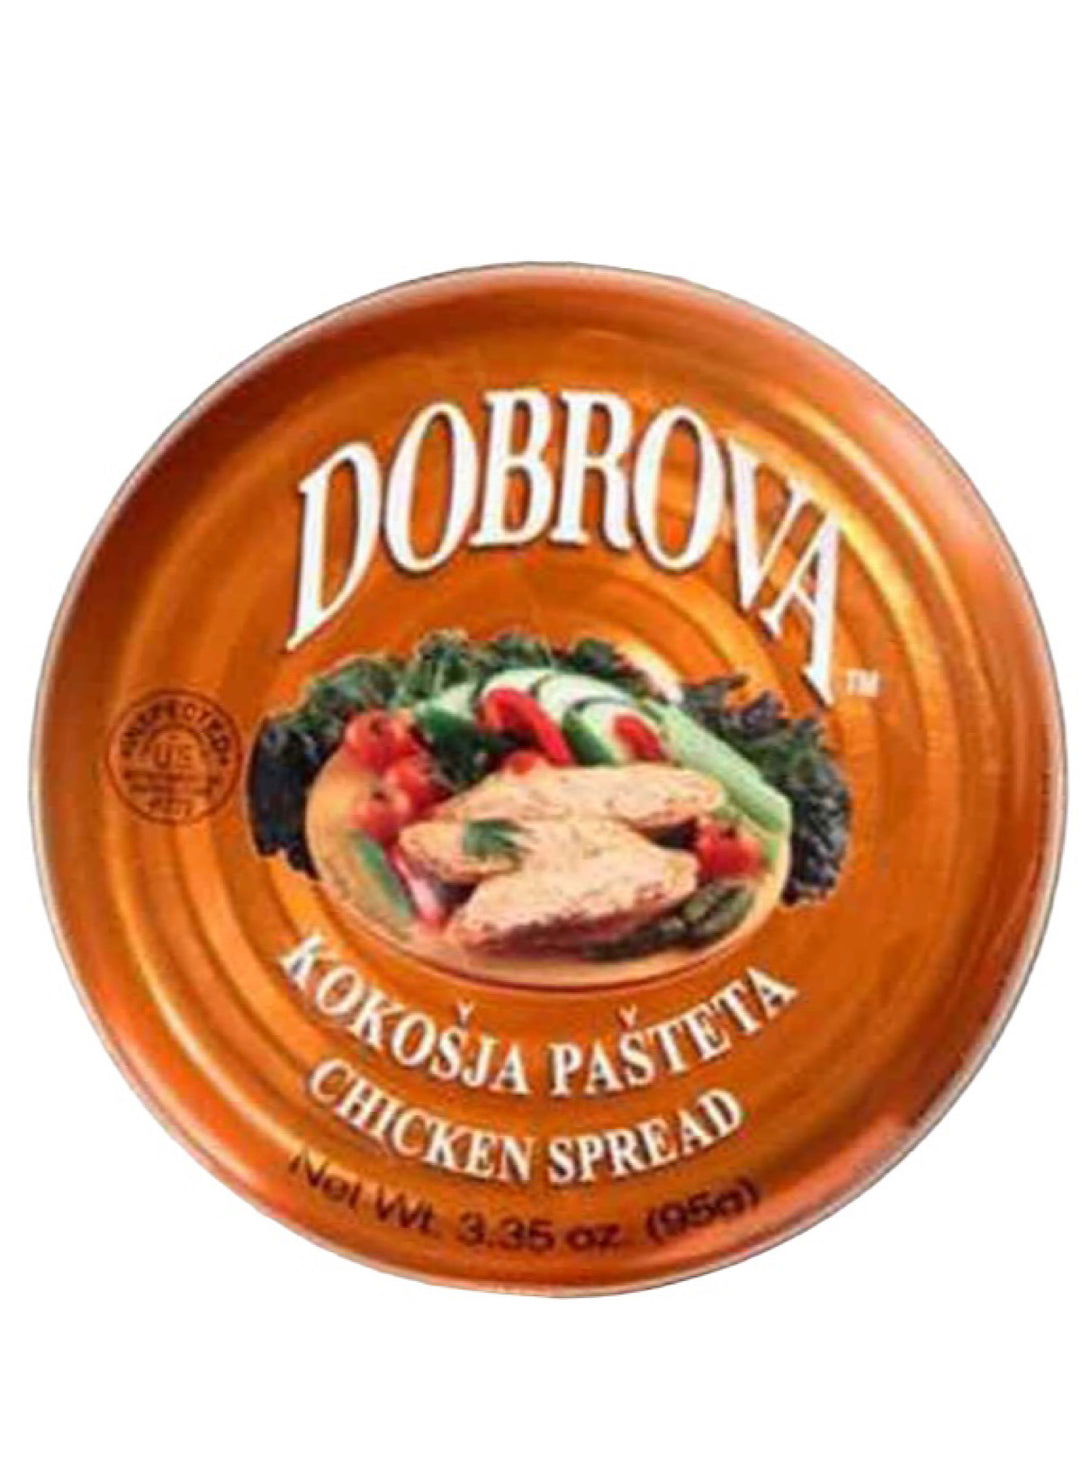 Chicken Pate Spread - Dobrova - 95g